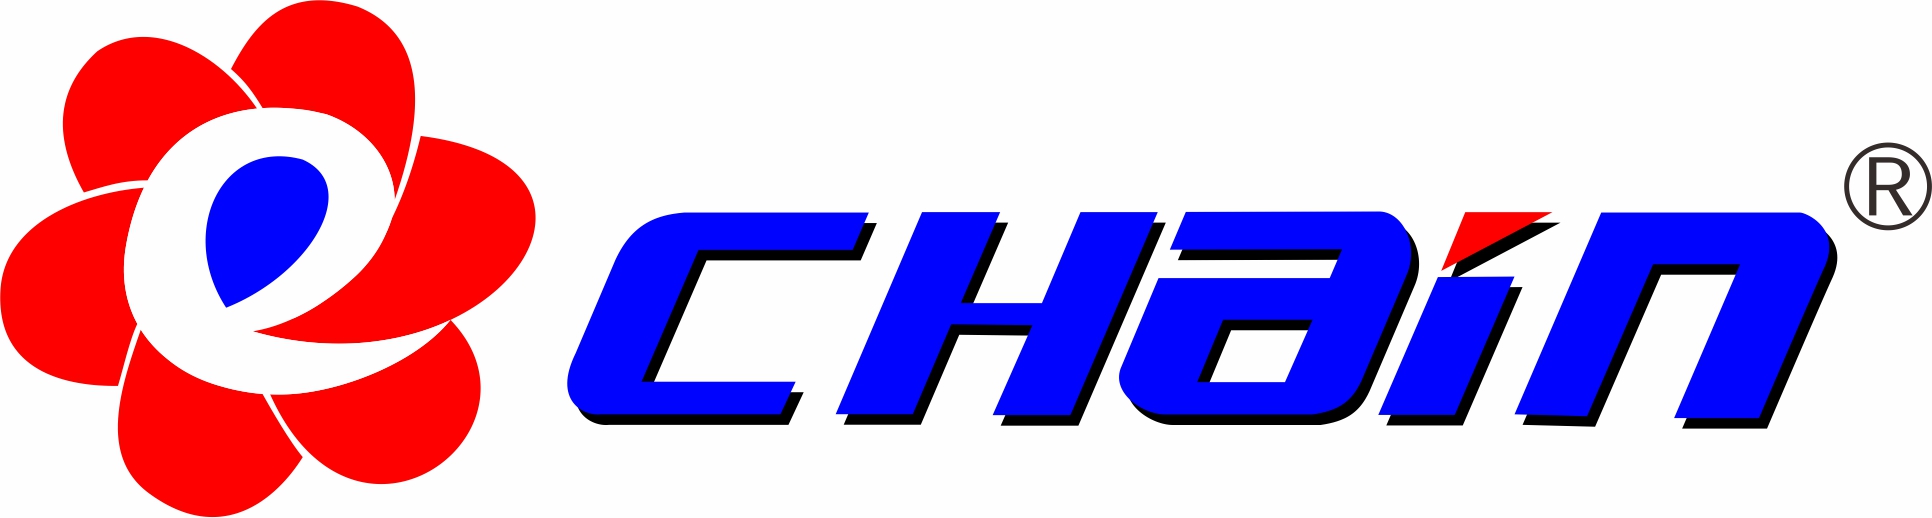 Echaintool Precision Co., Ltd -Logo